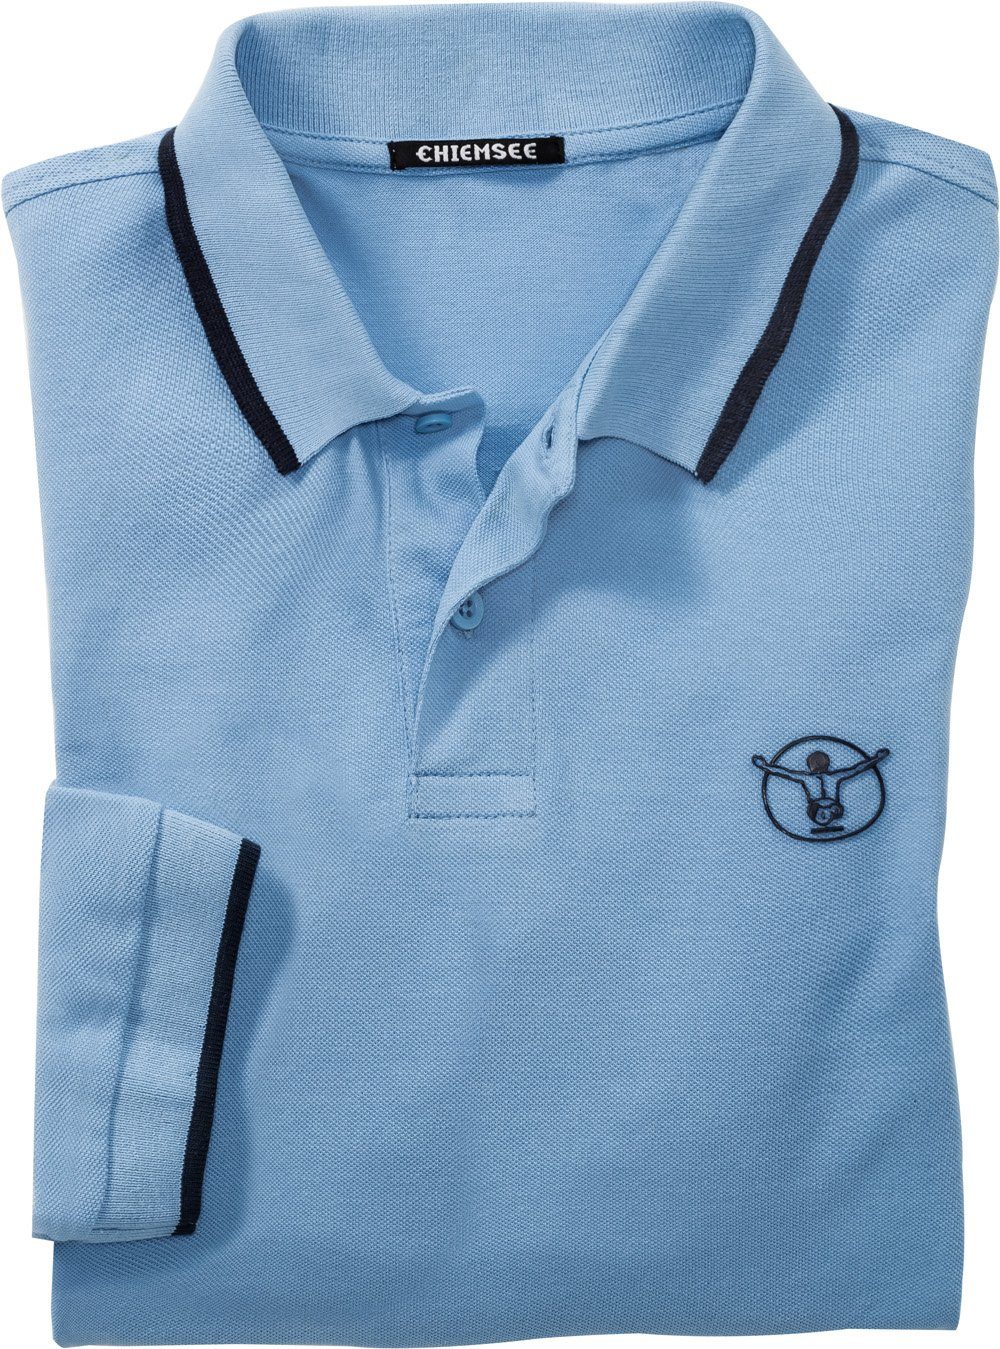 hellblau formstabilem Langarm-Poloshirt Baumwoll-Piqué aus Chiemsee